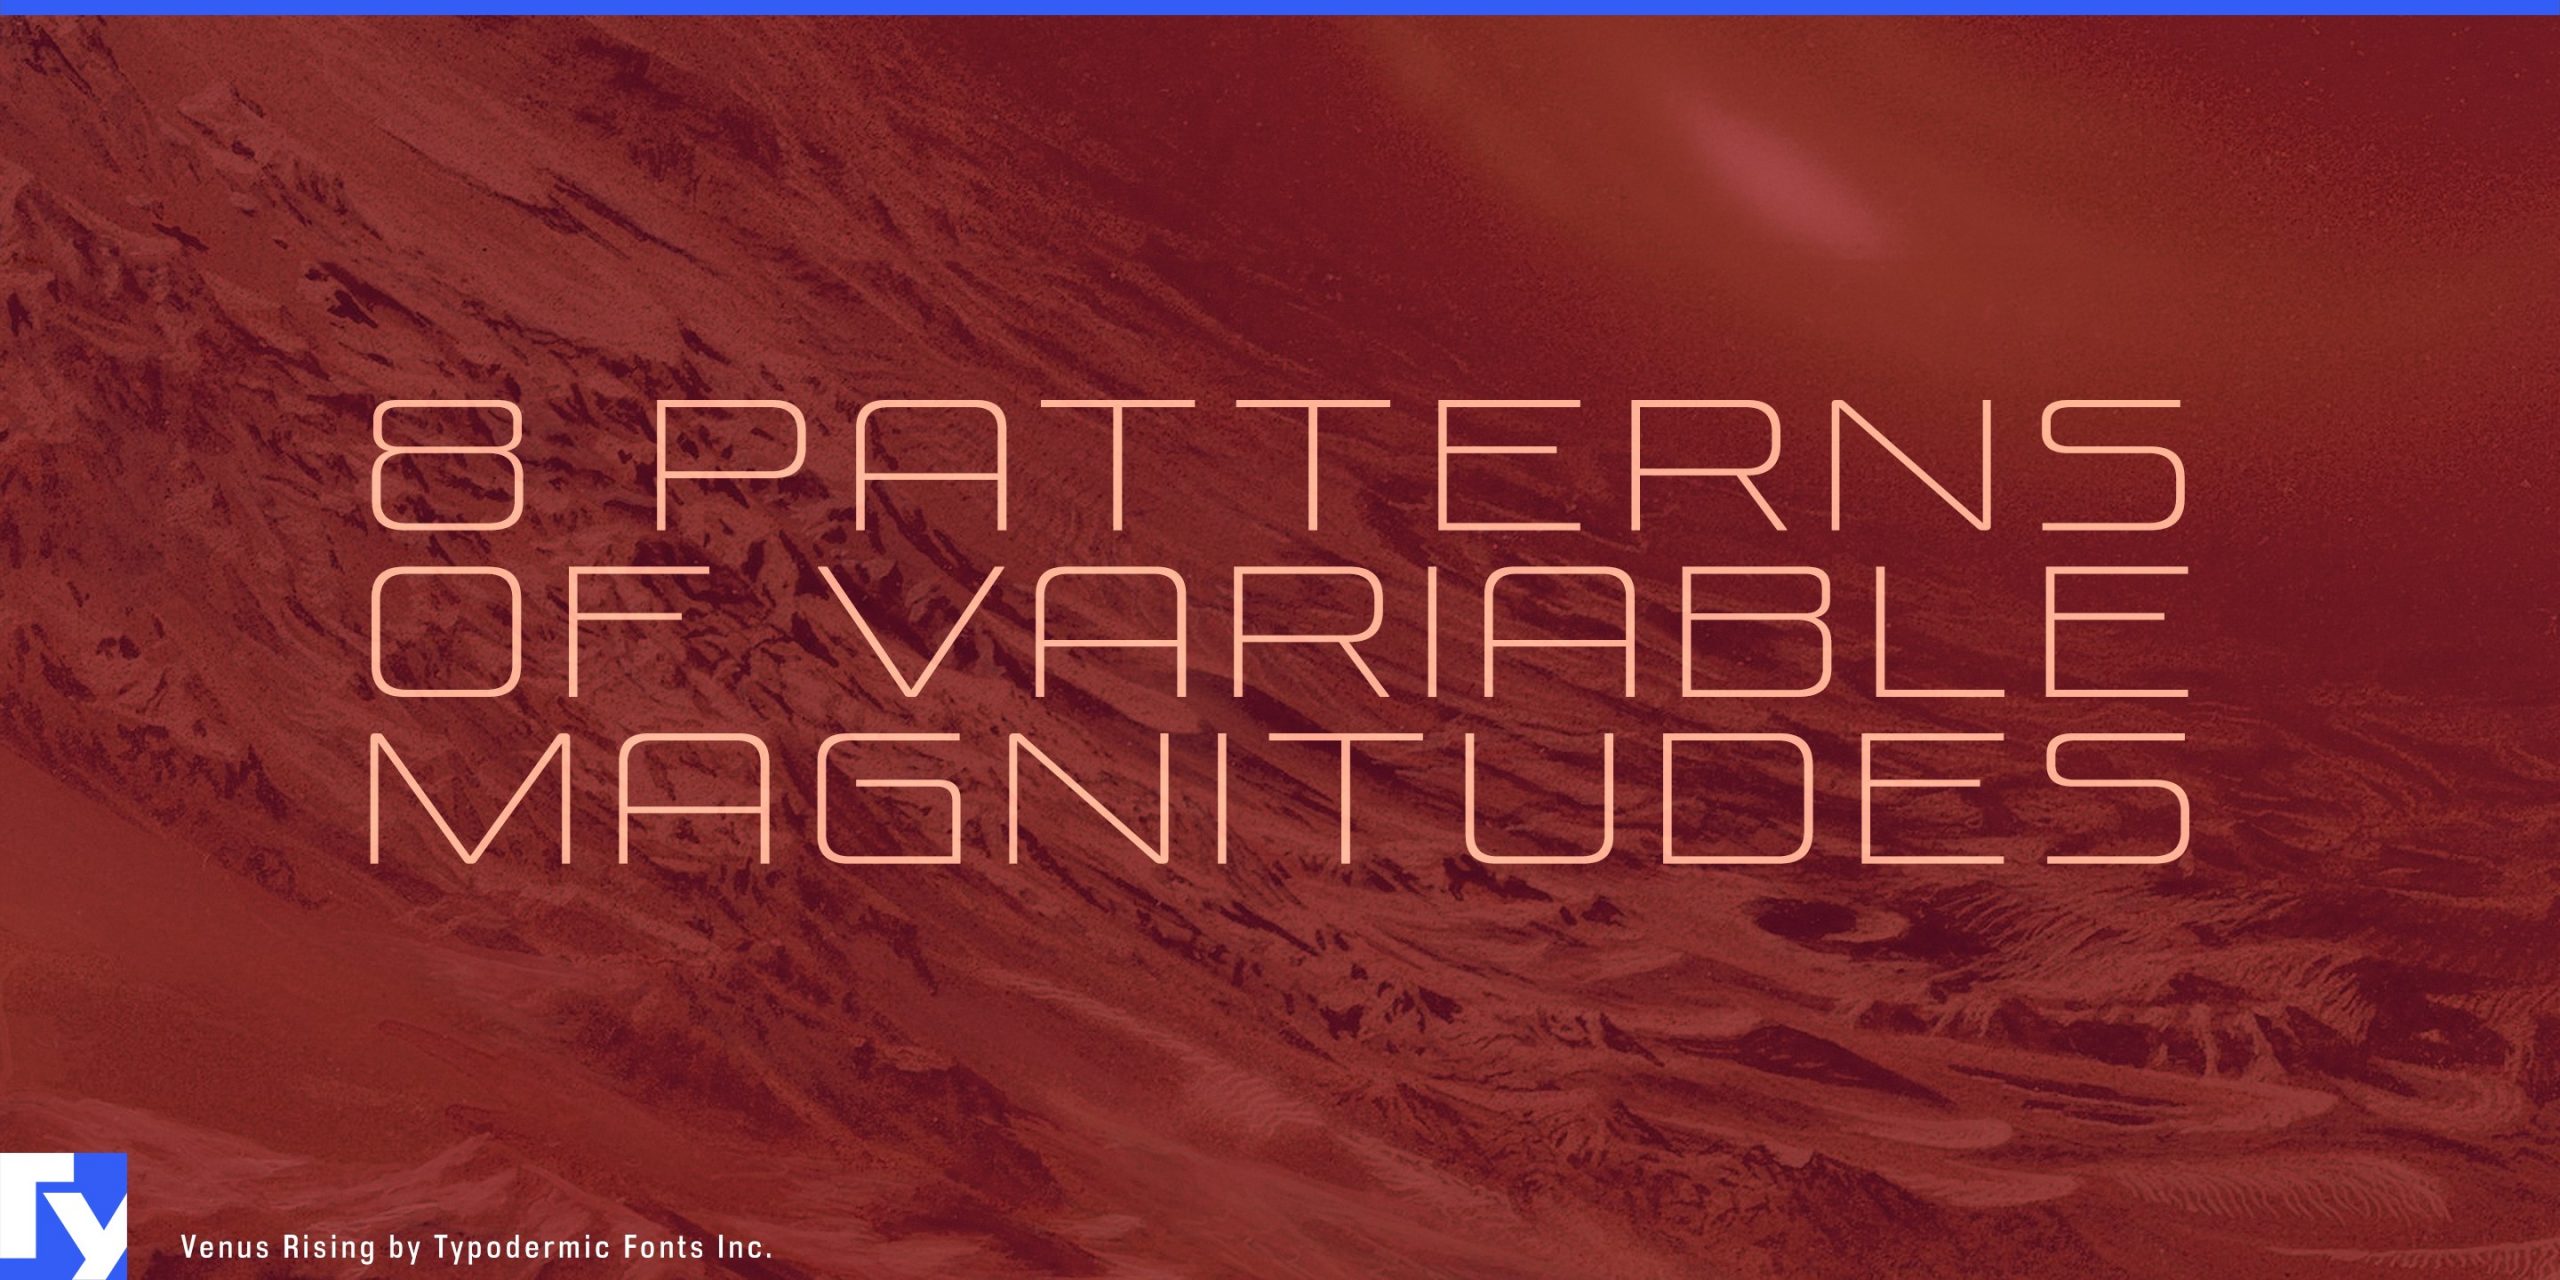 Quadratical Symmetry: Embrace the Futuristic Precision of Venus Rising Typeface